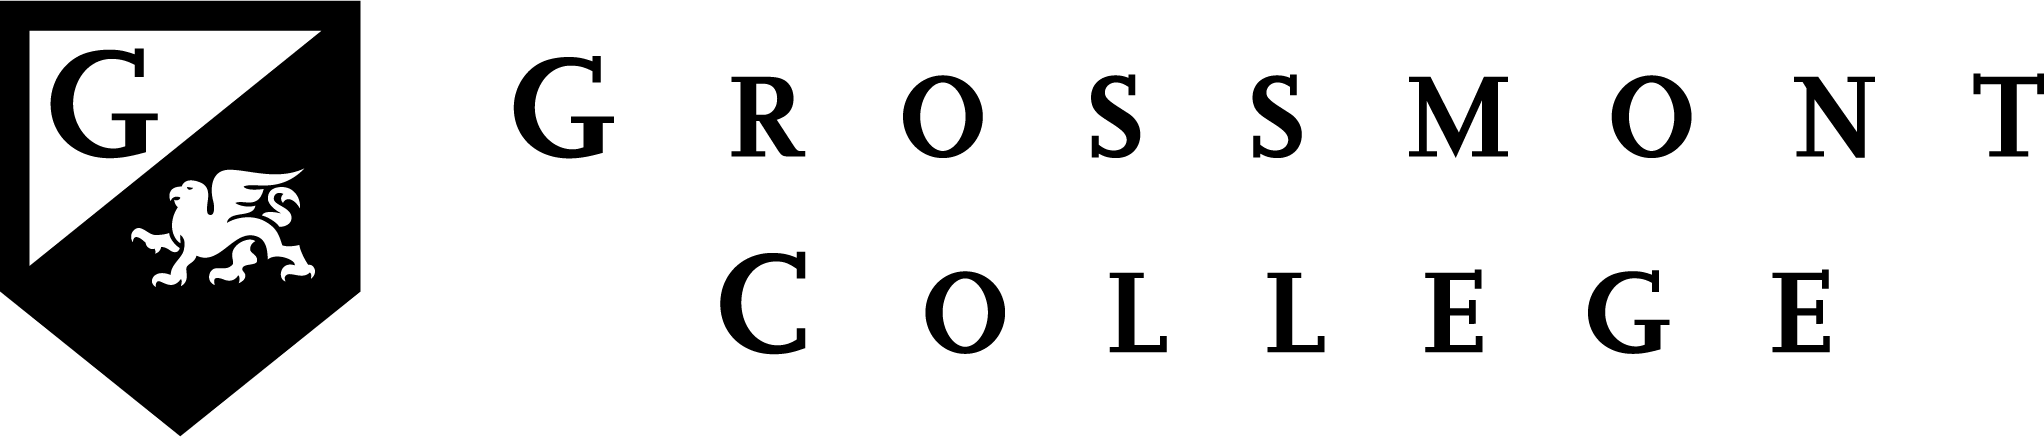 Grossmont College Logo Black Horizontal